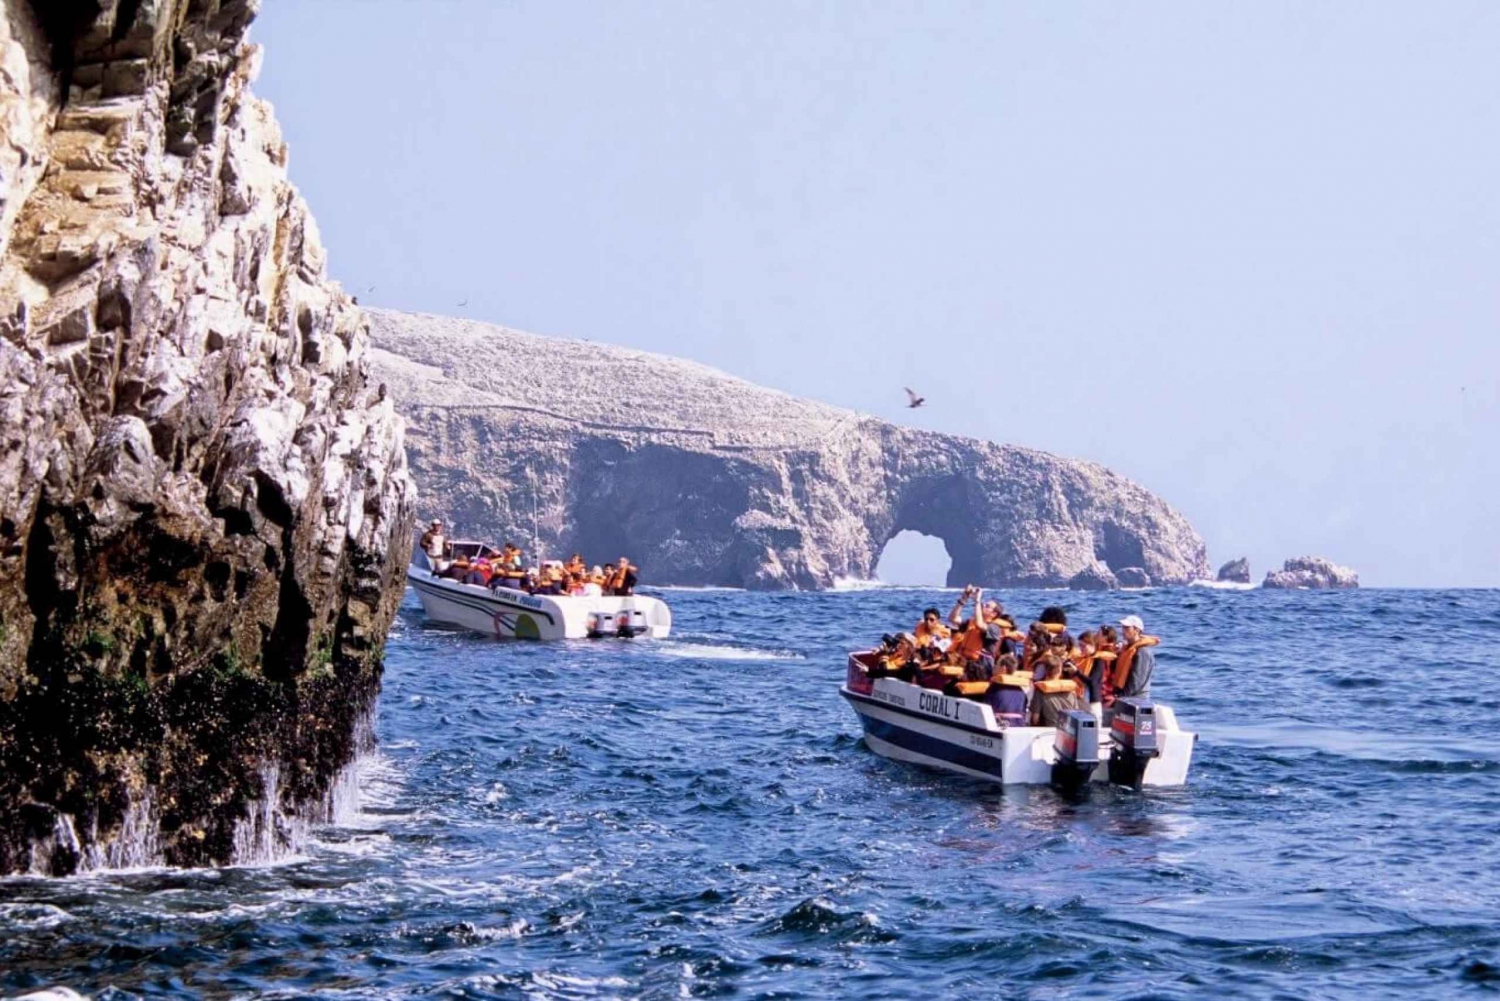 Ica: Short excursion to Ballestas Island | Boat ride